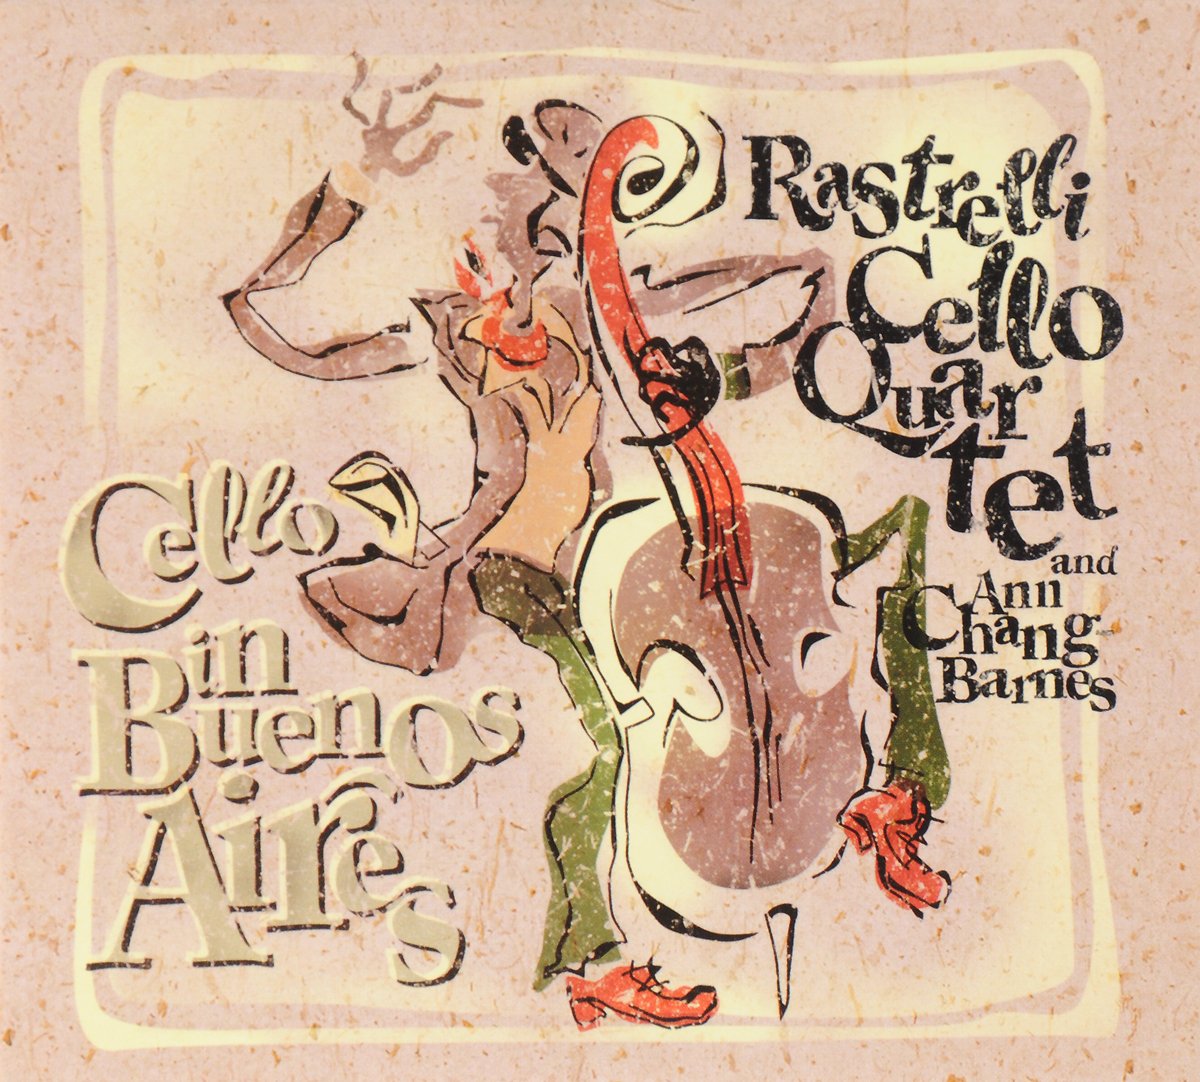 Rastrelli Cello Quartet. Cello In Buenos Aires